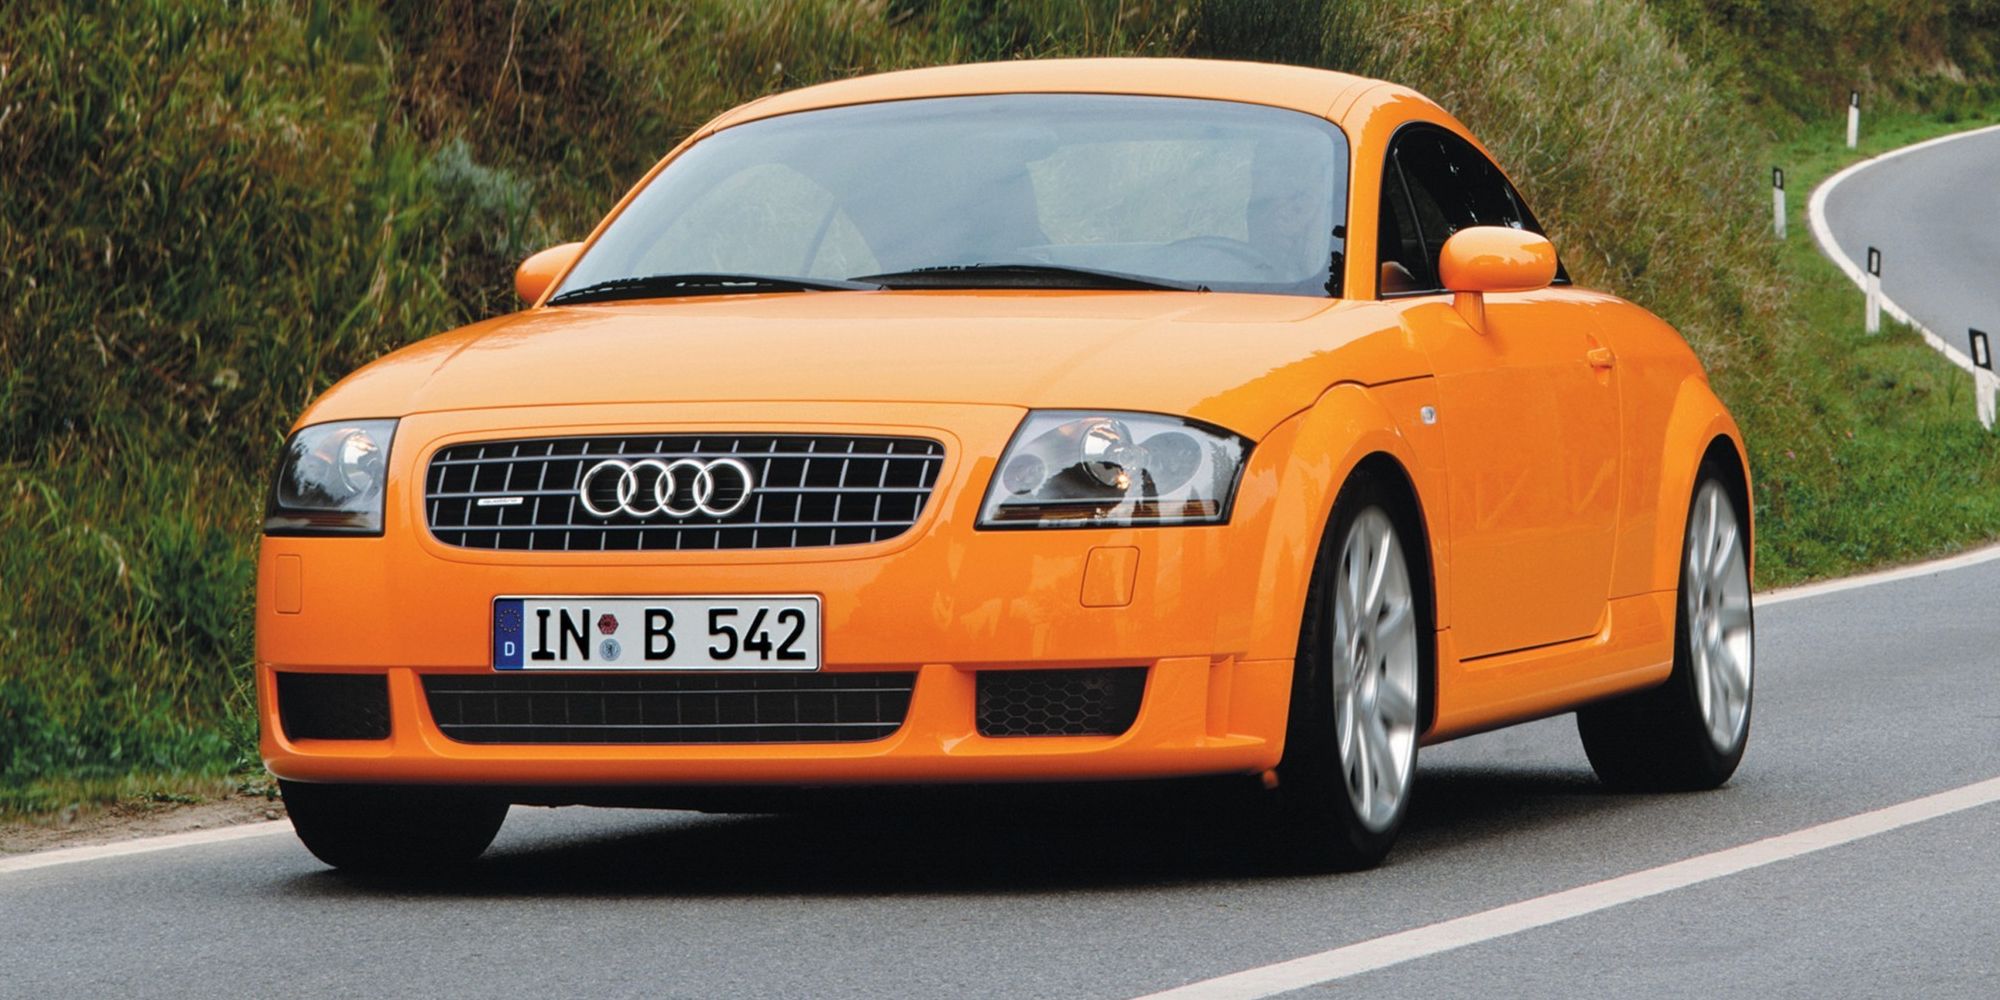 The front of an orange Mk1 TT